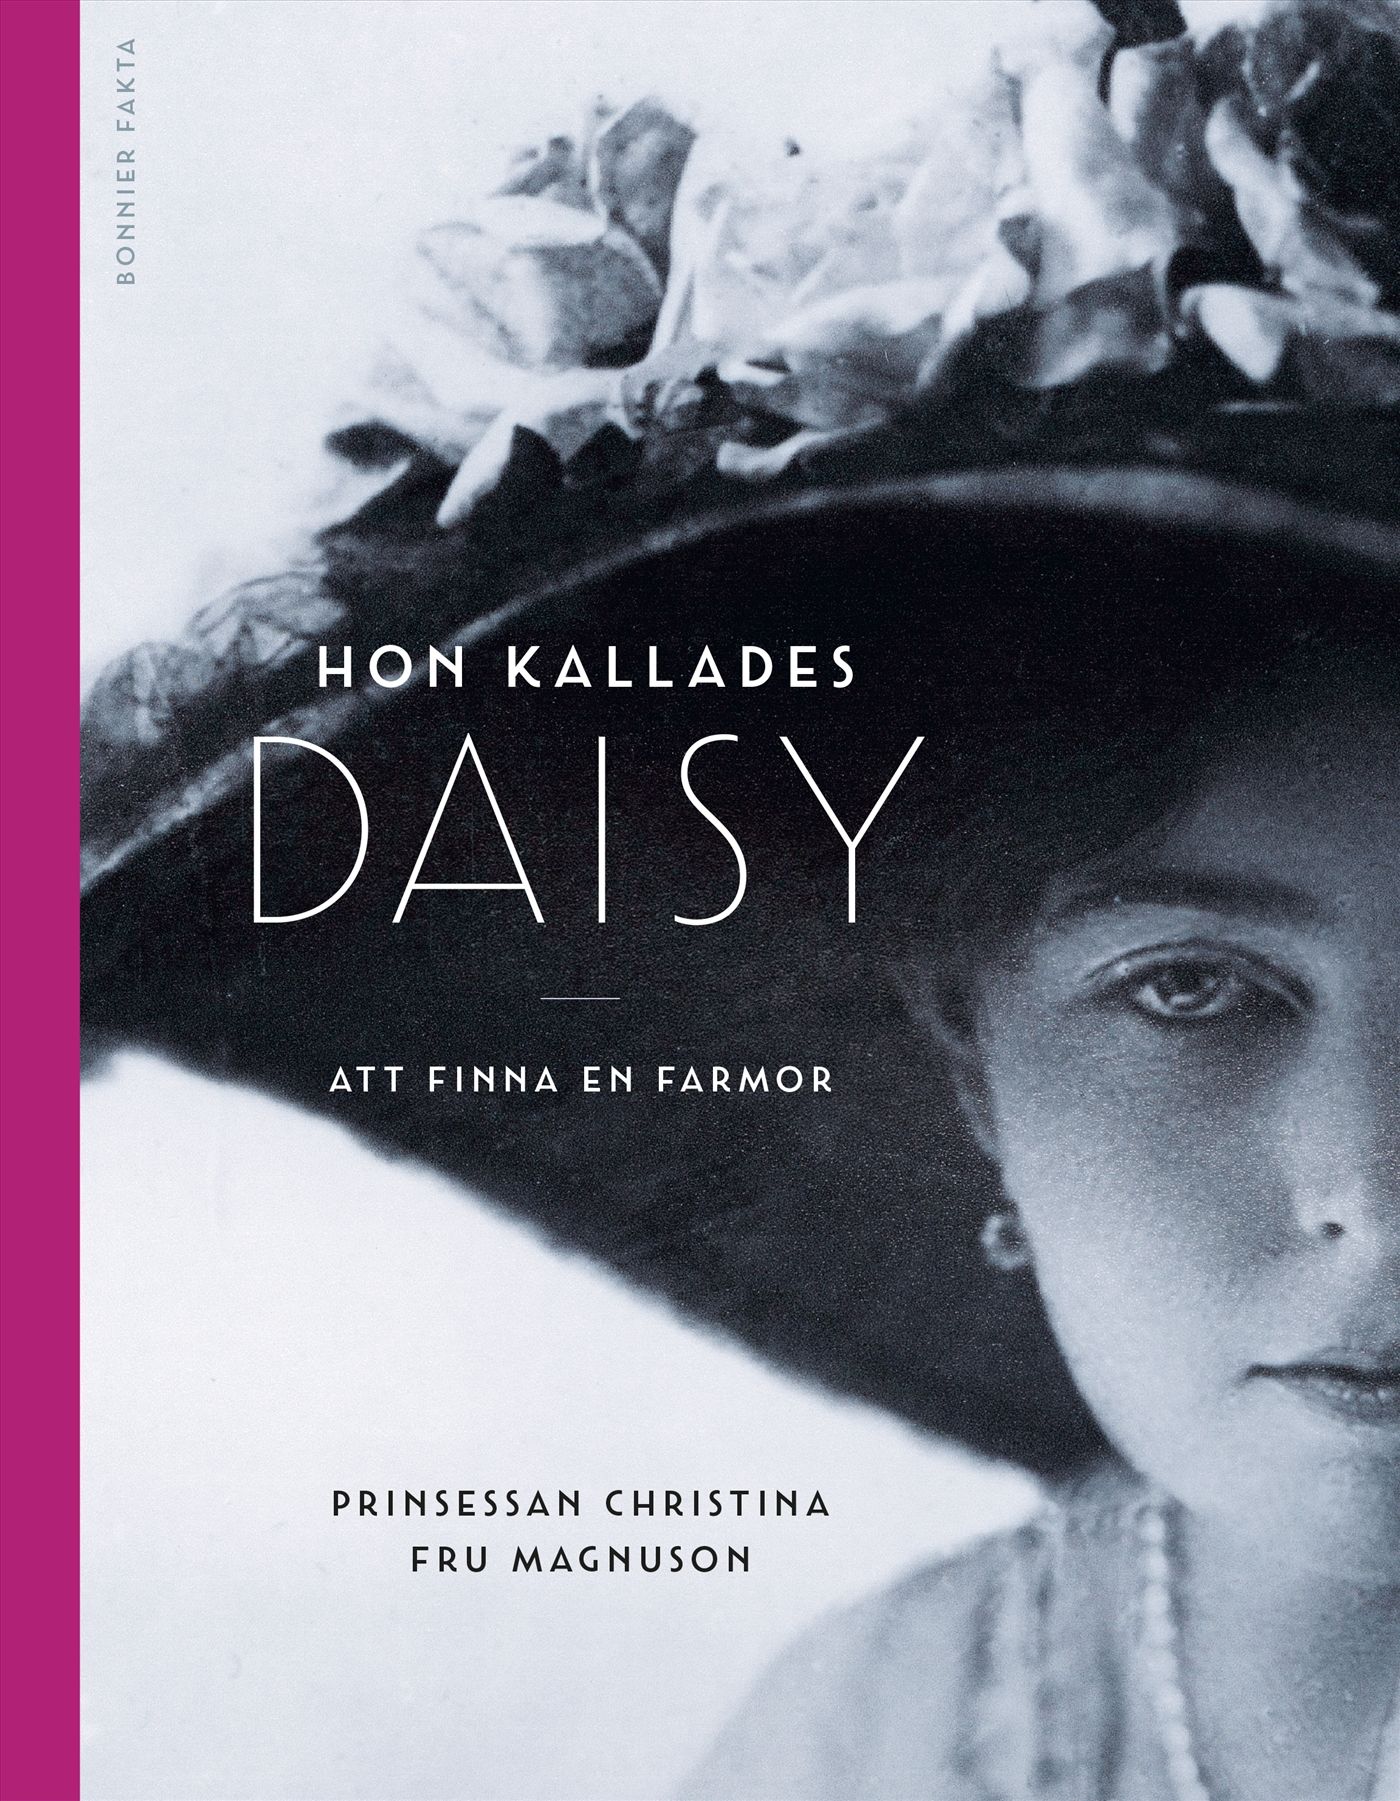 Hon kallades Daisy, e-bog af Prinsessan Christina Fru Magnuson